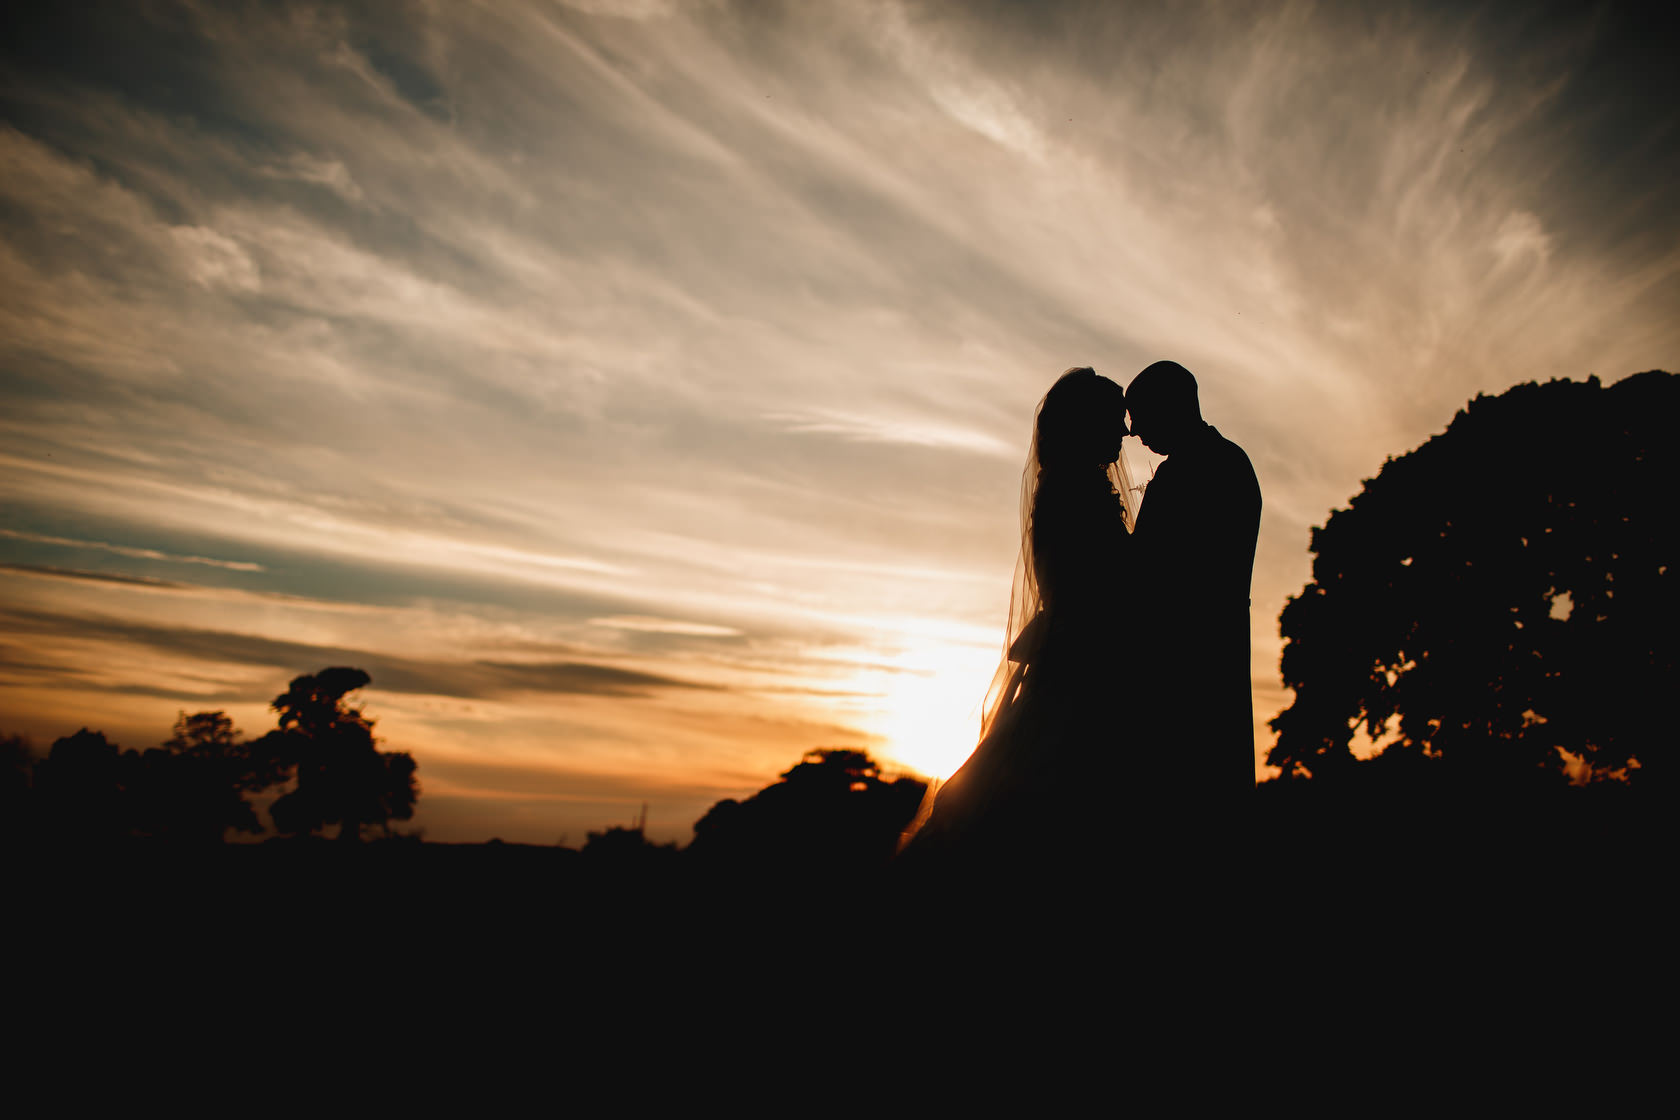 Wedding photographer sandhole oak barn - arj photography